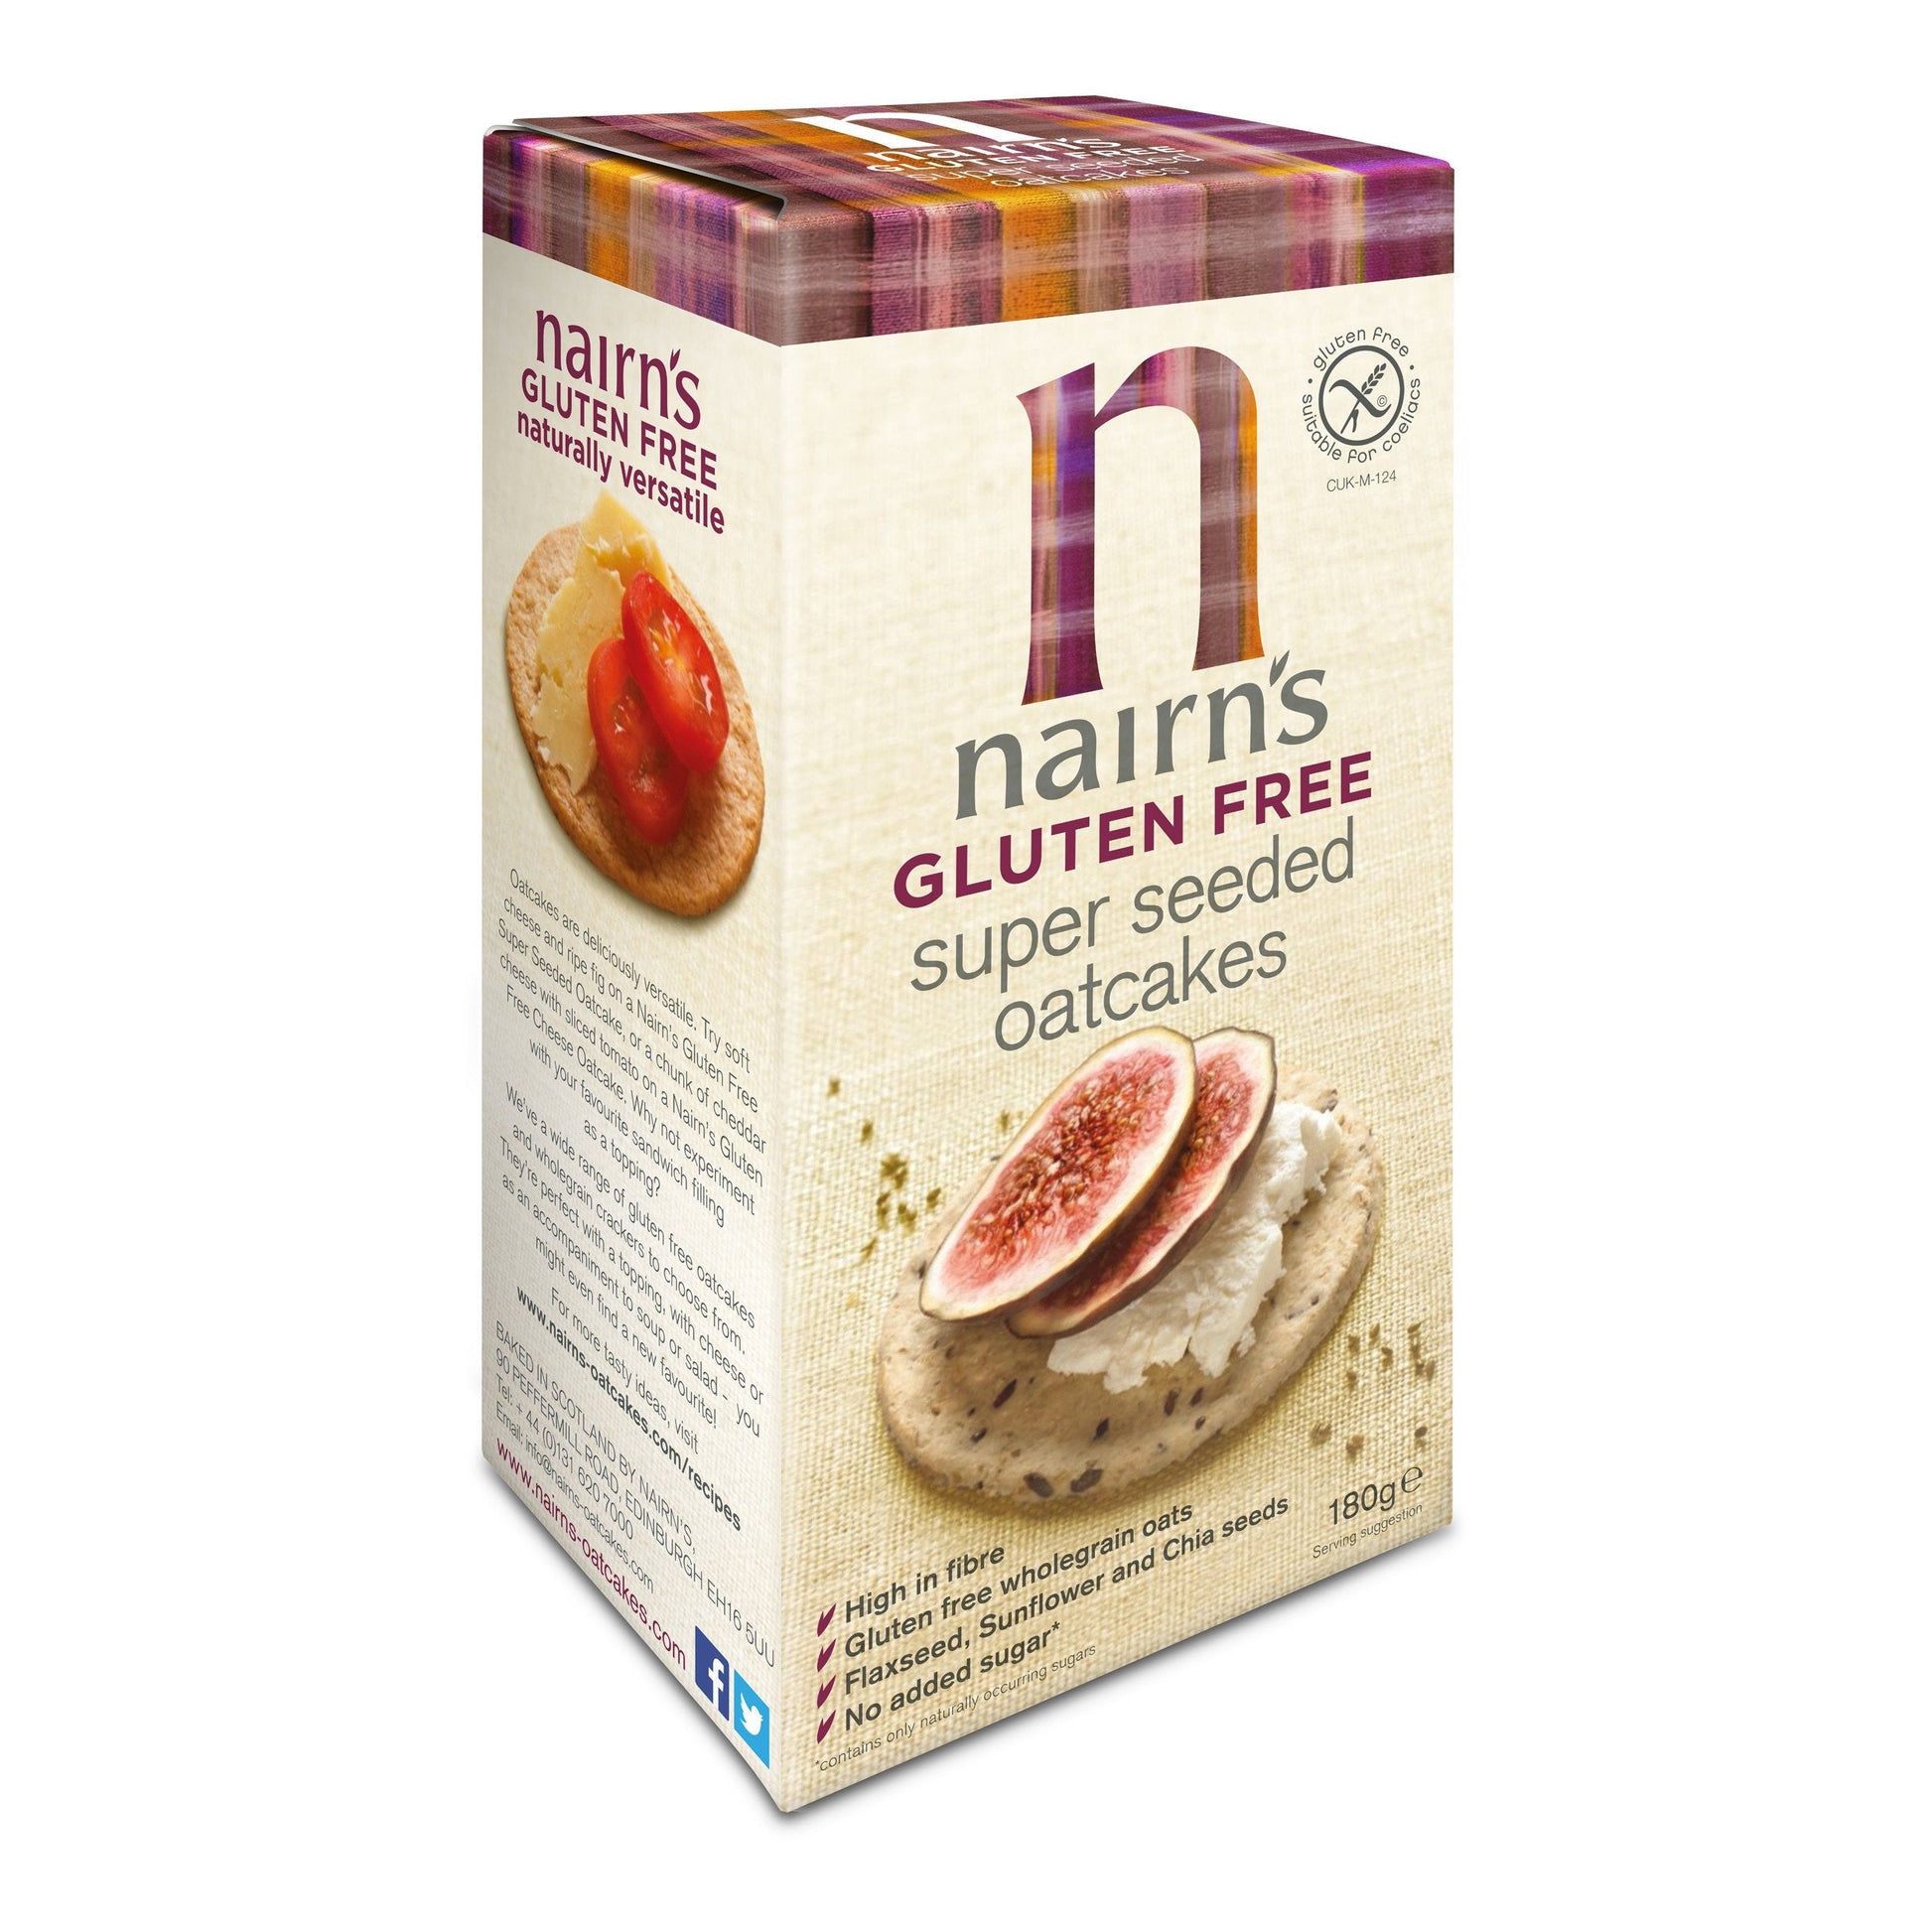 Nairns Gluten Free Super Seeded oatcake 180G - Just Natural